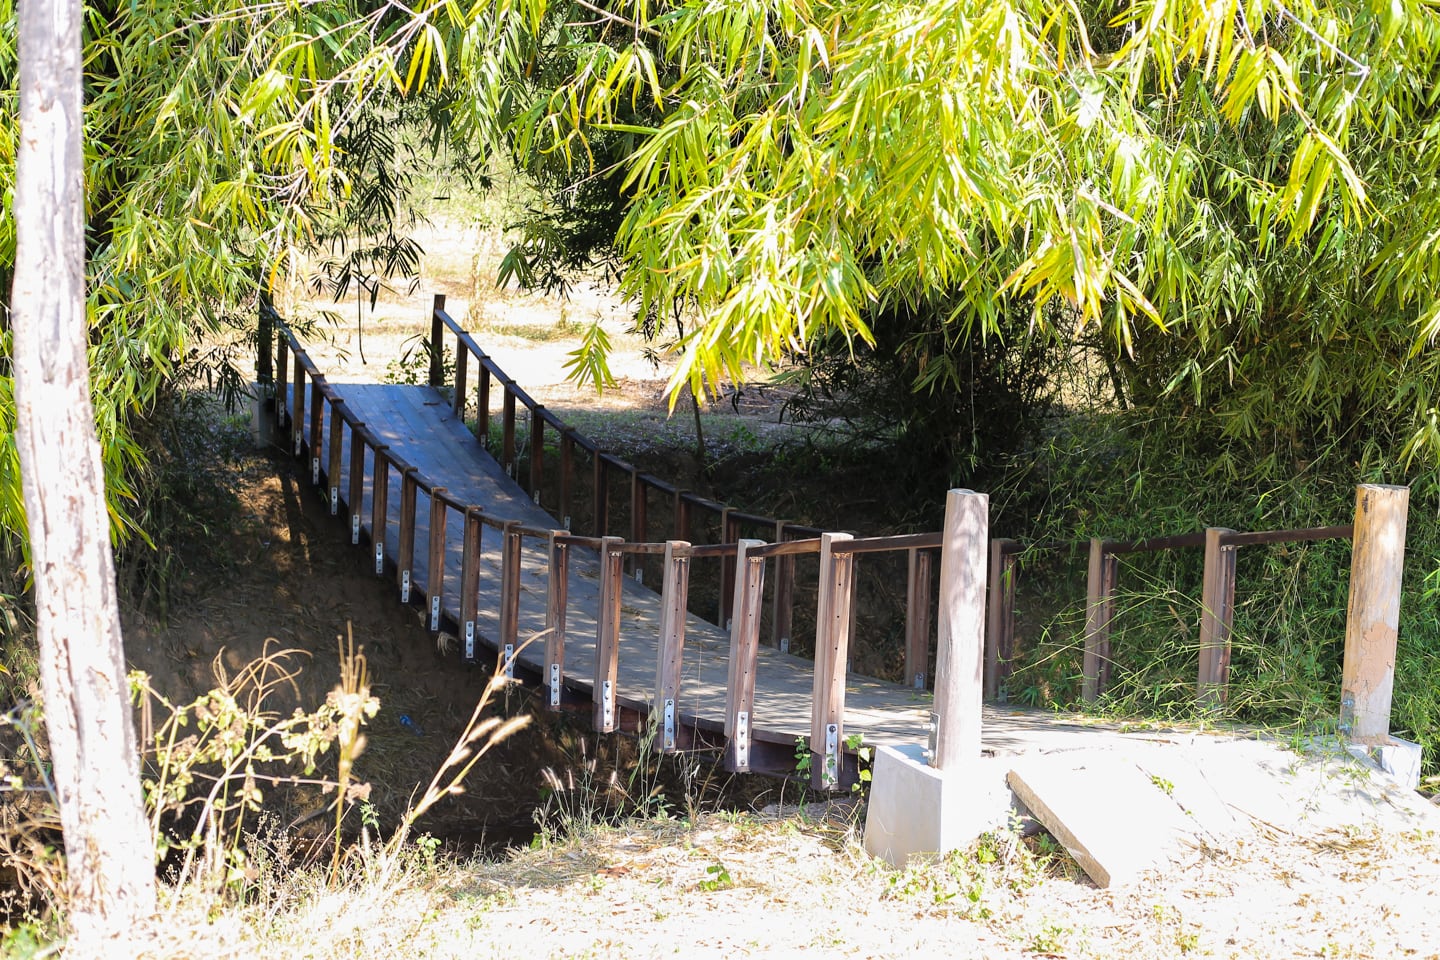 small wooden bridge over creek